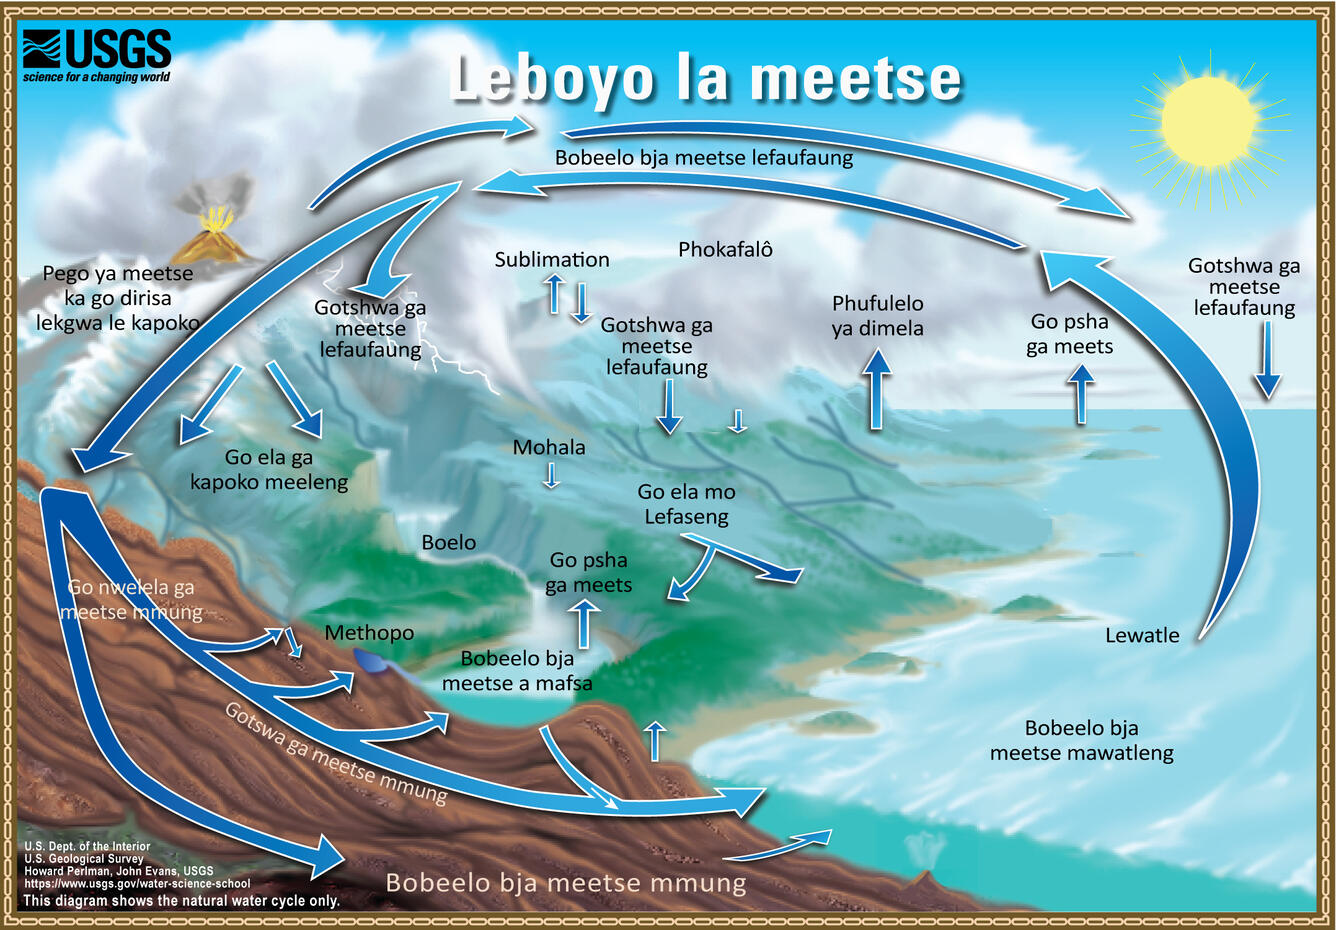 Leboyo la meetse, The Natural Water Cycle, Northern Sotho